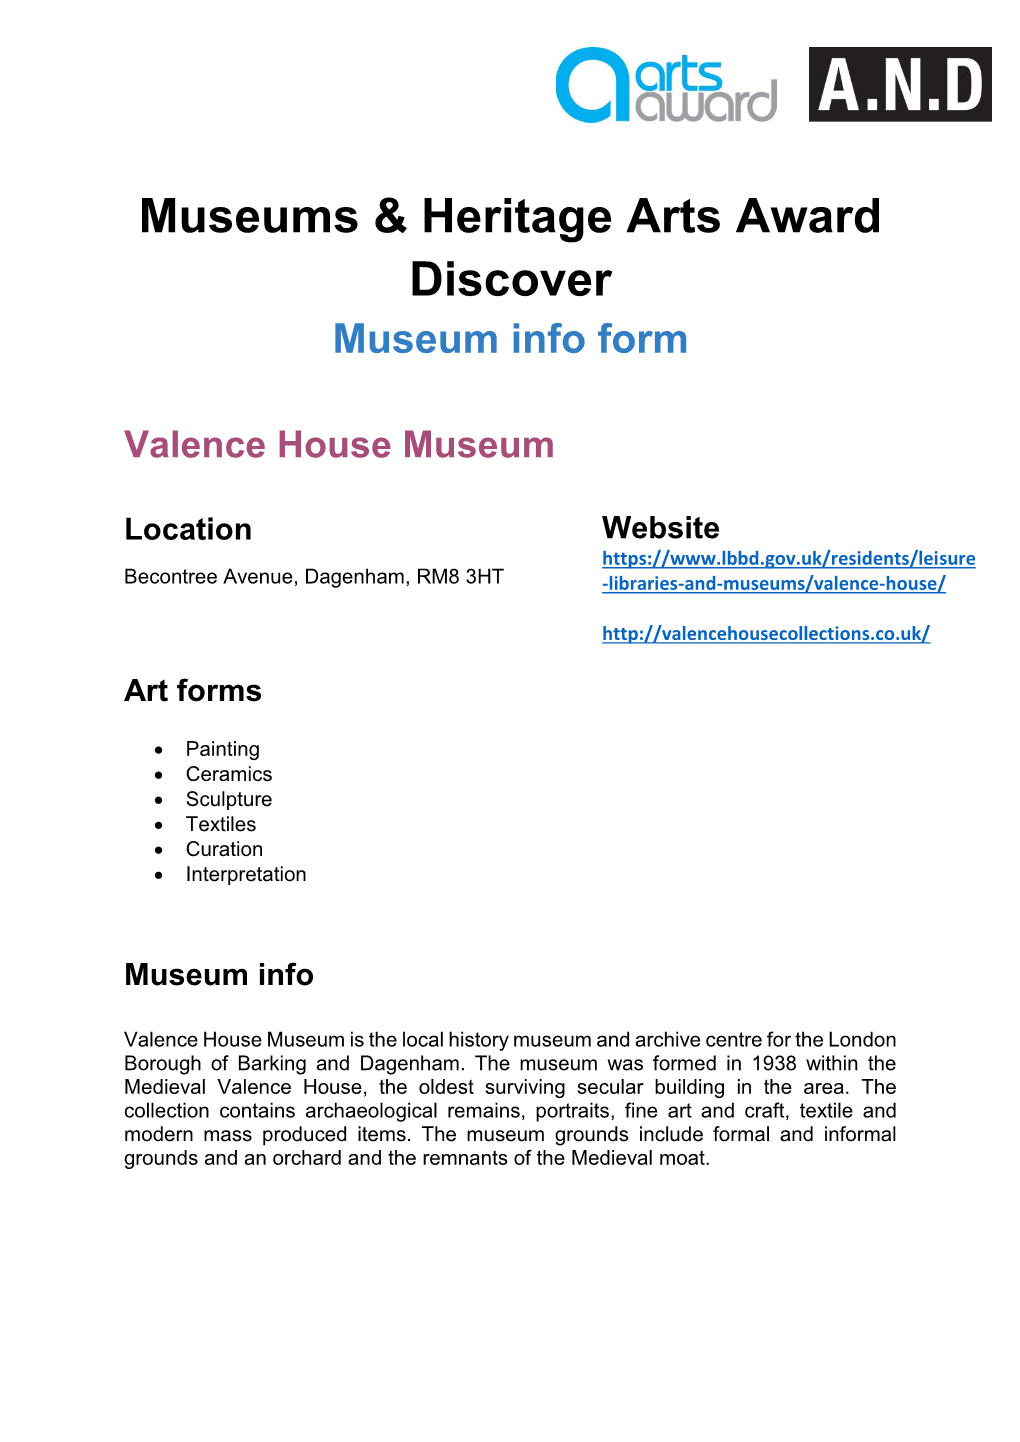 Museums & Heritage Arts Award Discover